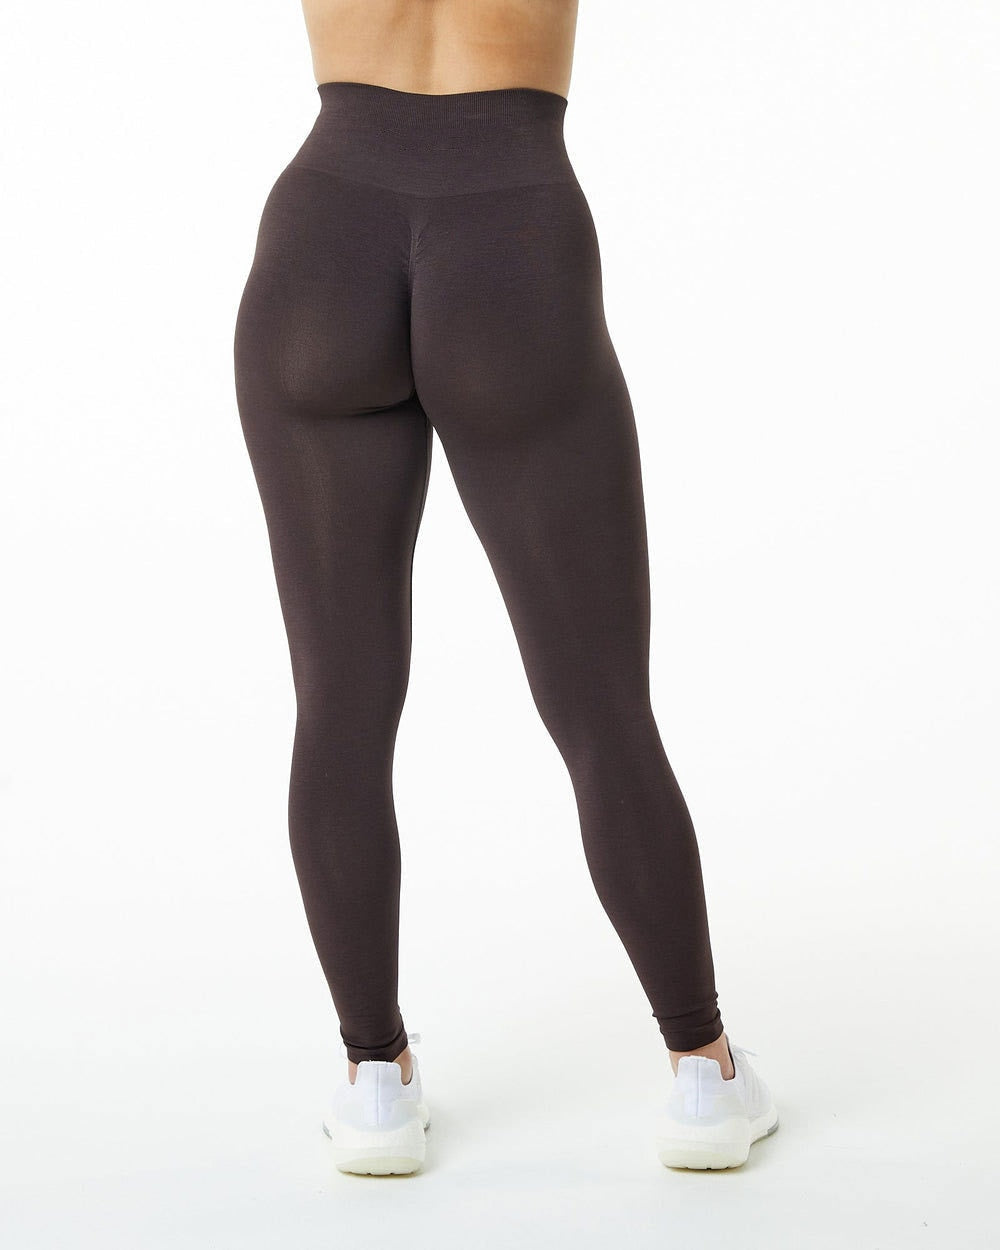 Ruffle Yoga Pants Activewear Truetights Chocolate S 